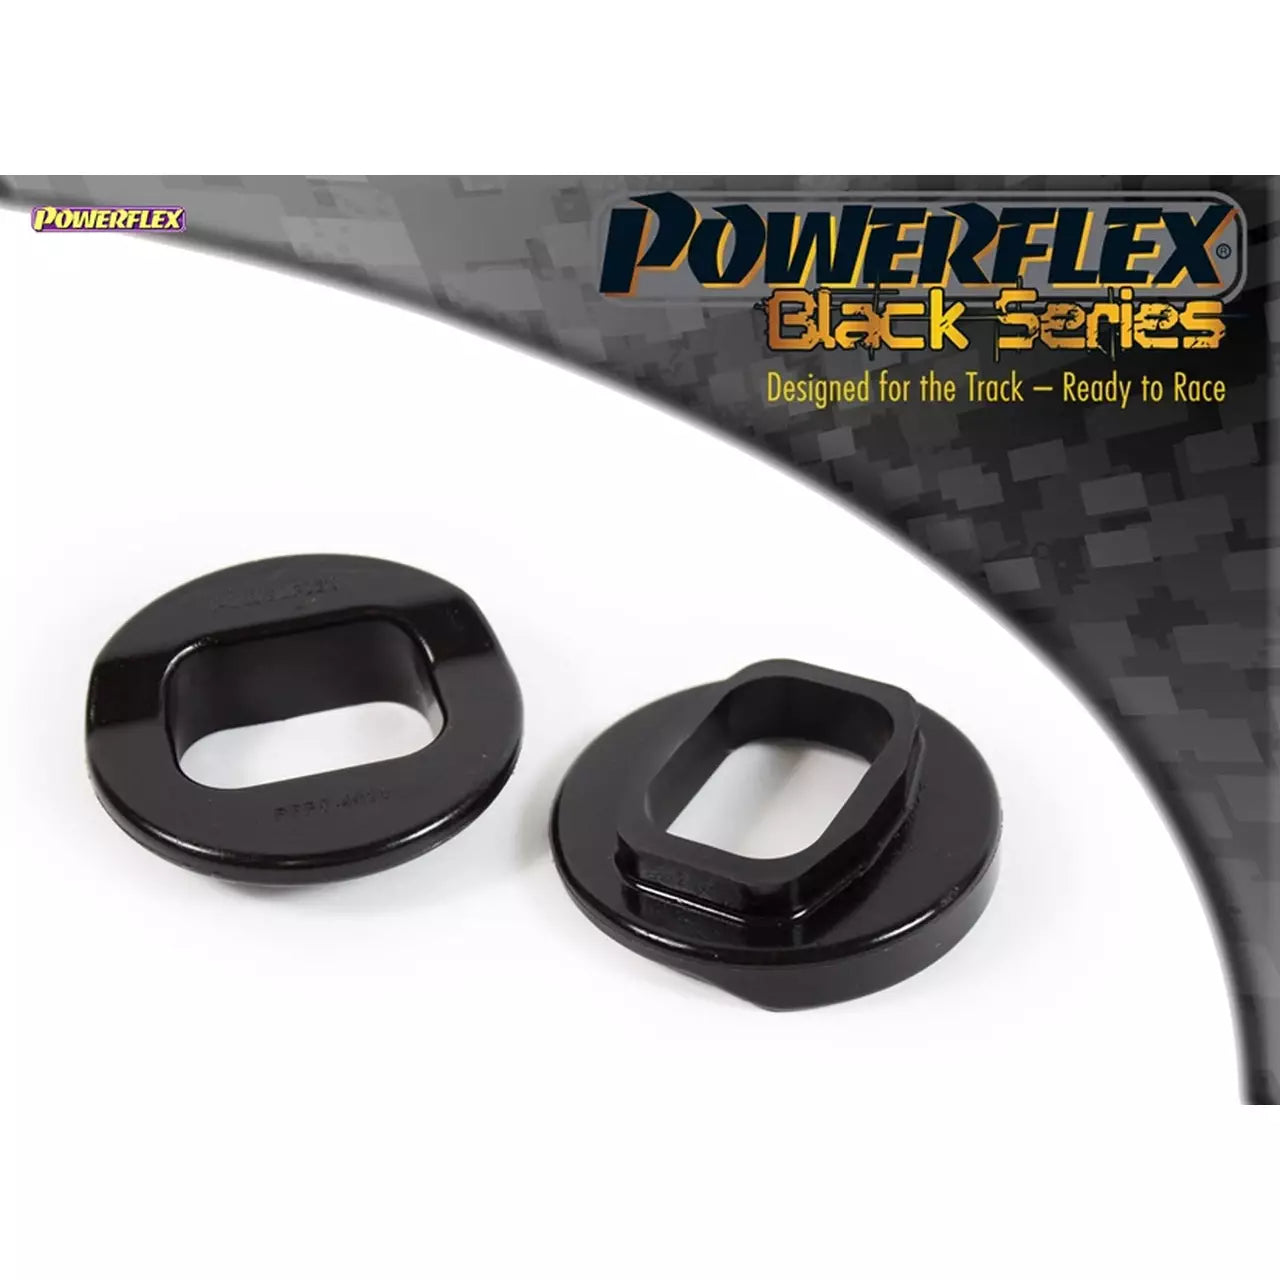 Powerflex Track ignite performance